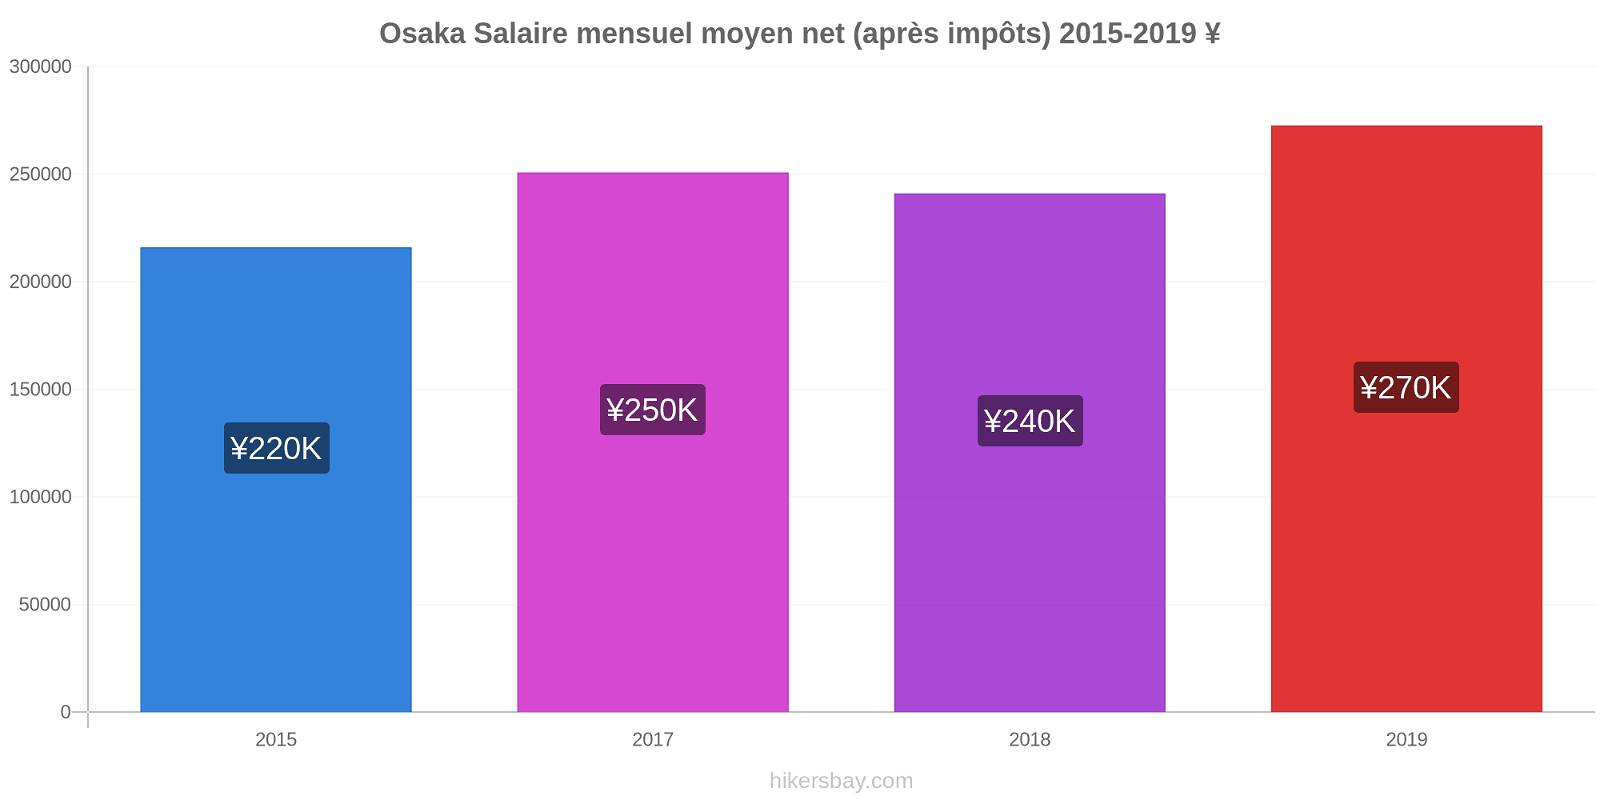 Osaka changements de prix Salaire mensuel Net (après impôts) hikersbay.com